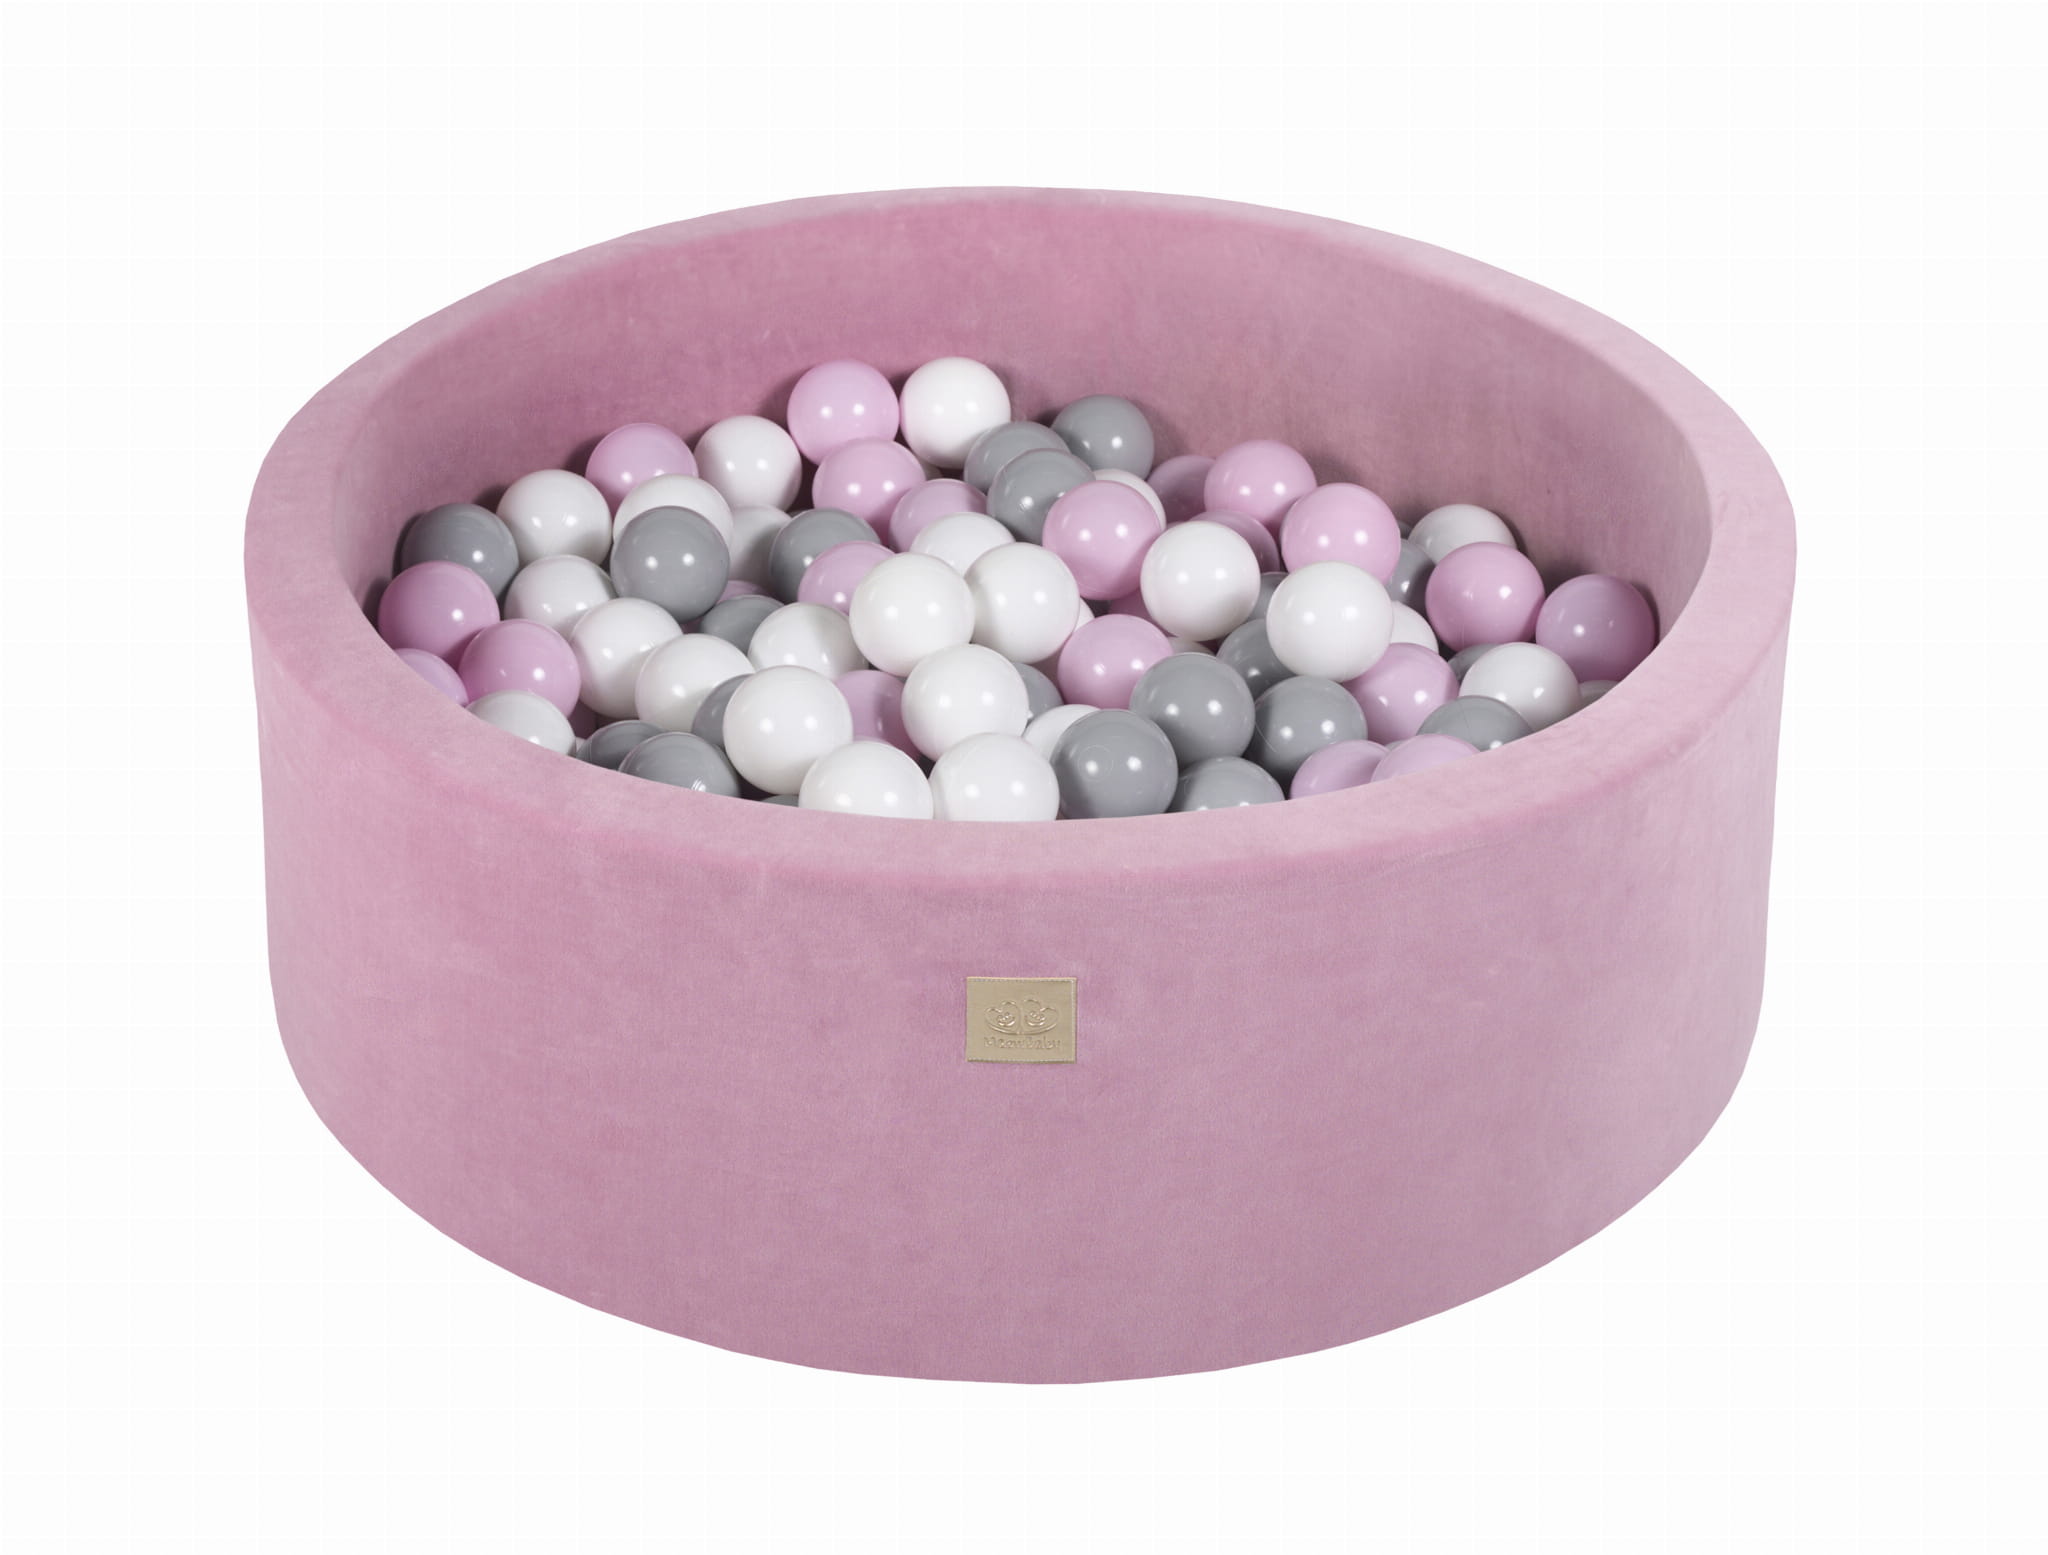 Ball pool Velvet with 250 balls - powder pink